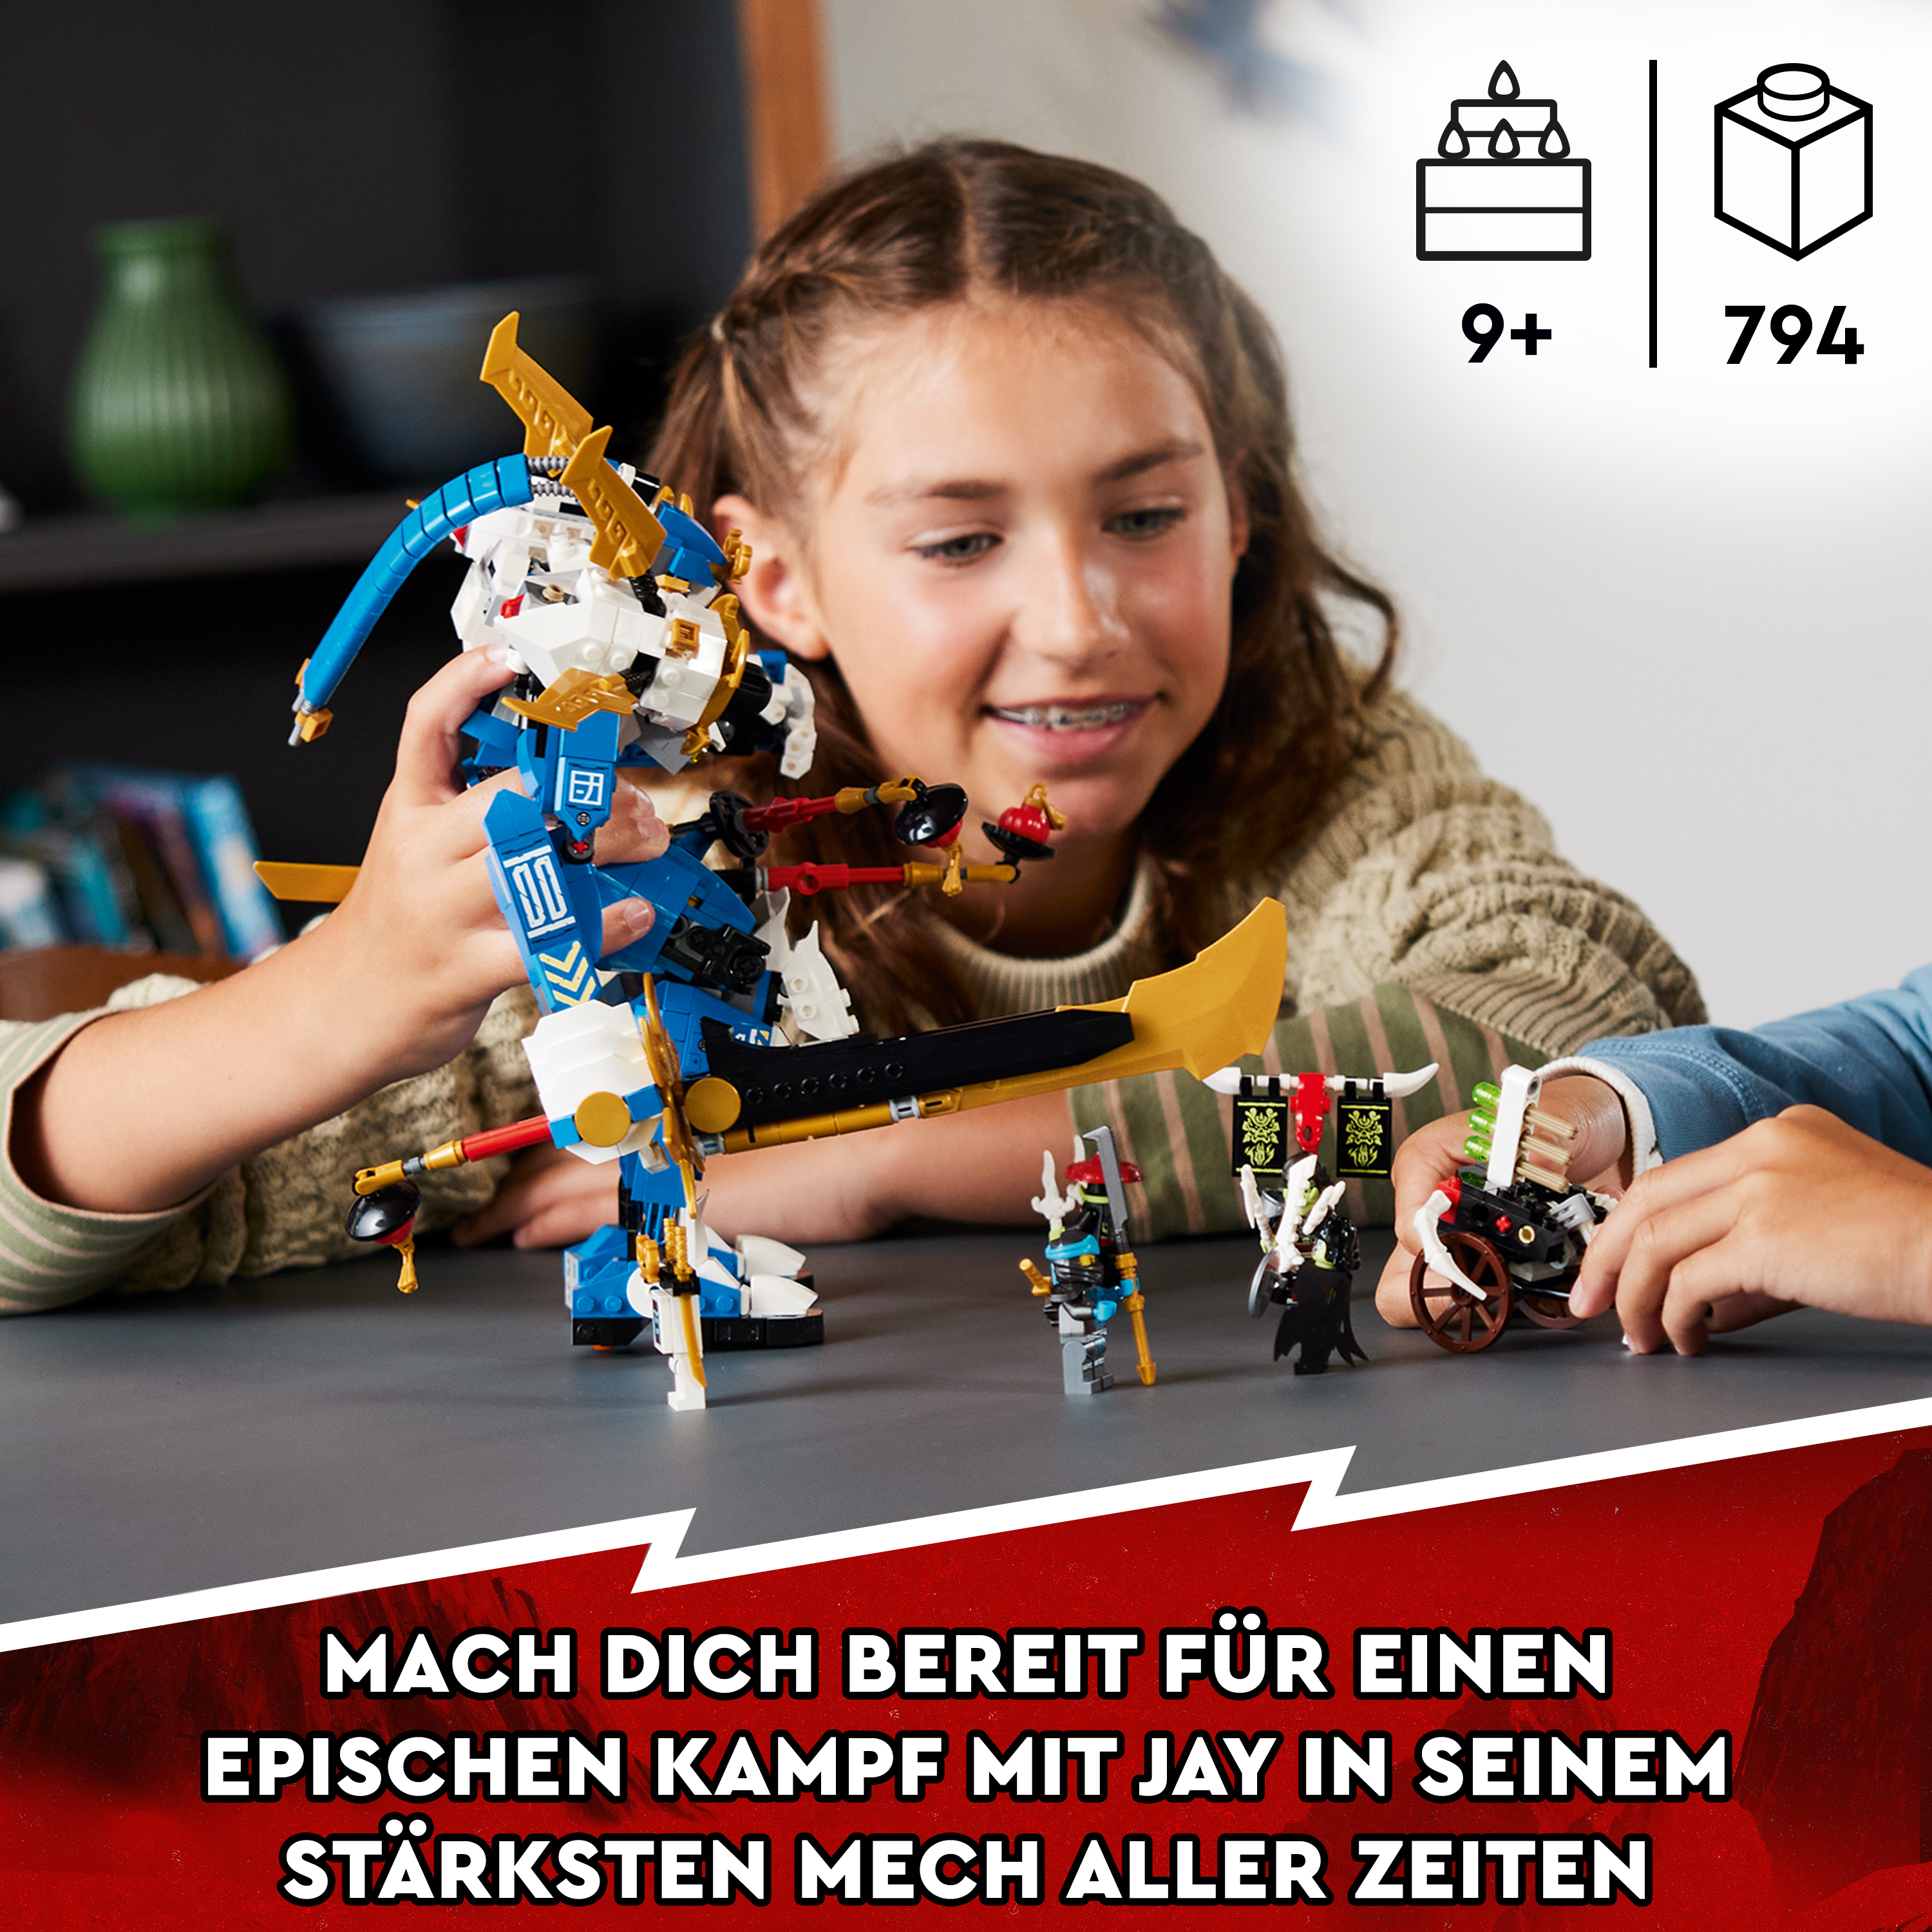 Titan-Mech LEGO Jays Mehrfarbig 71785 NINJAGO Bausatz,